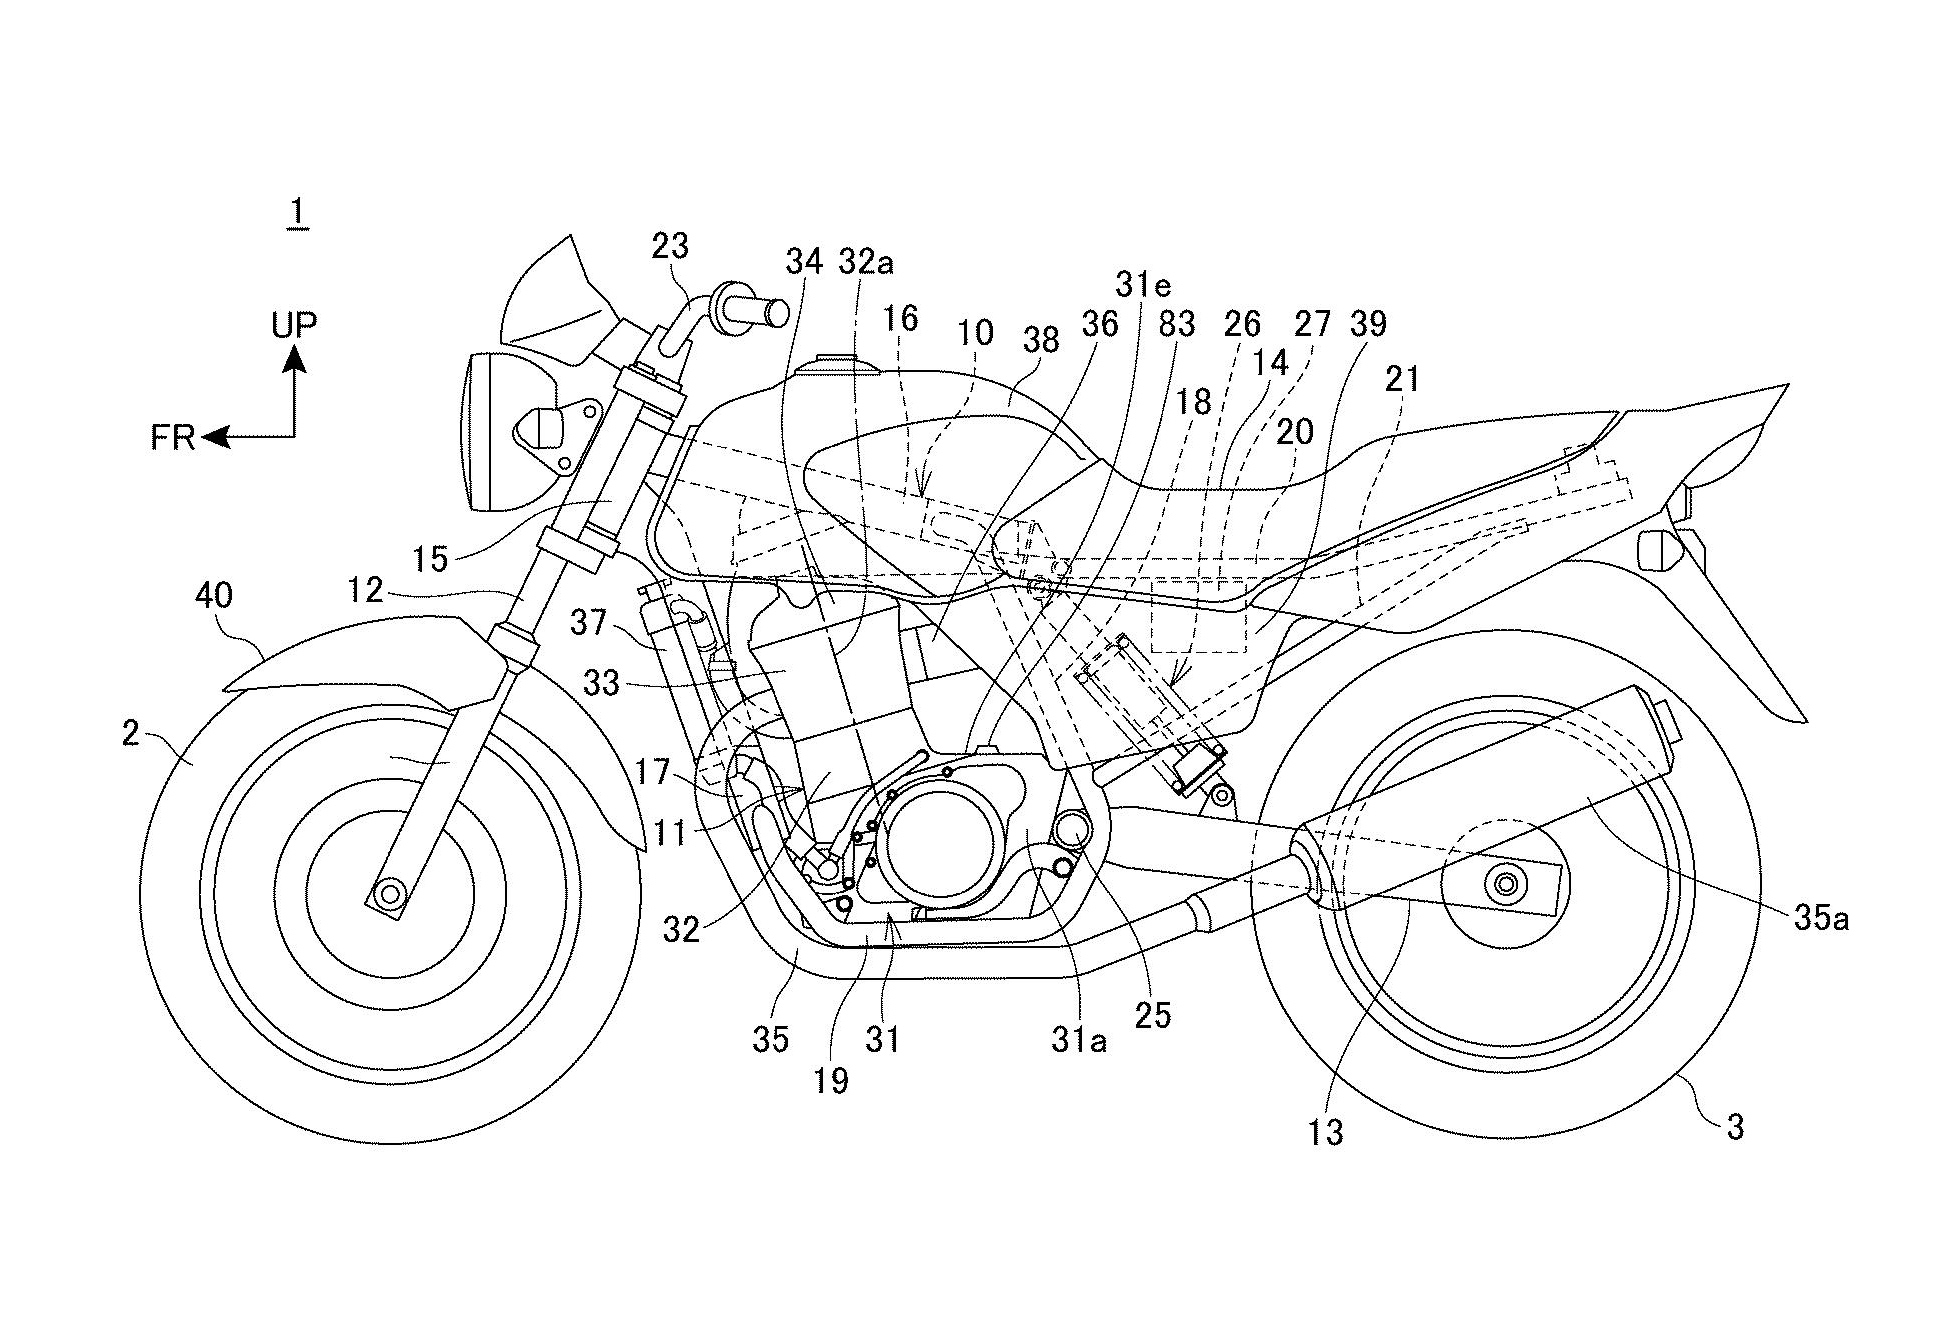 Patent Filings Reveal Potential Mono Shock Honda Cb250 Visordown